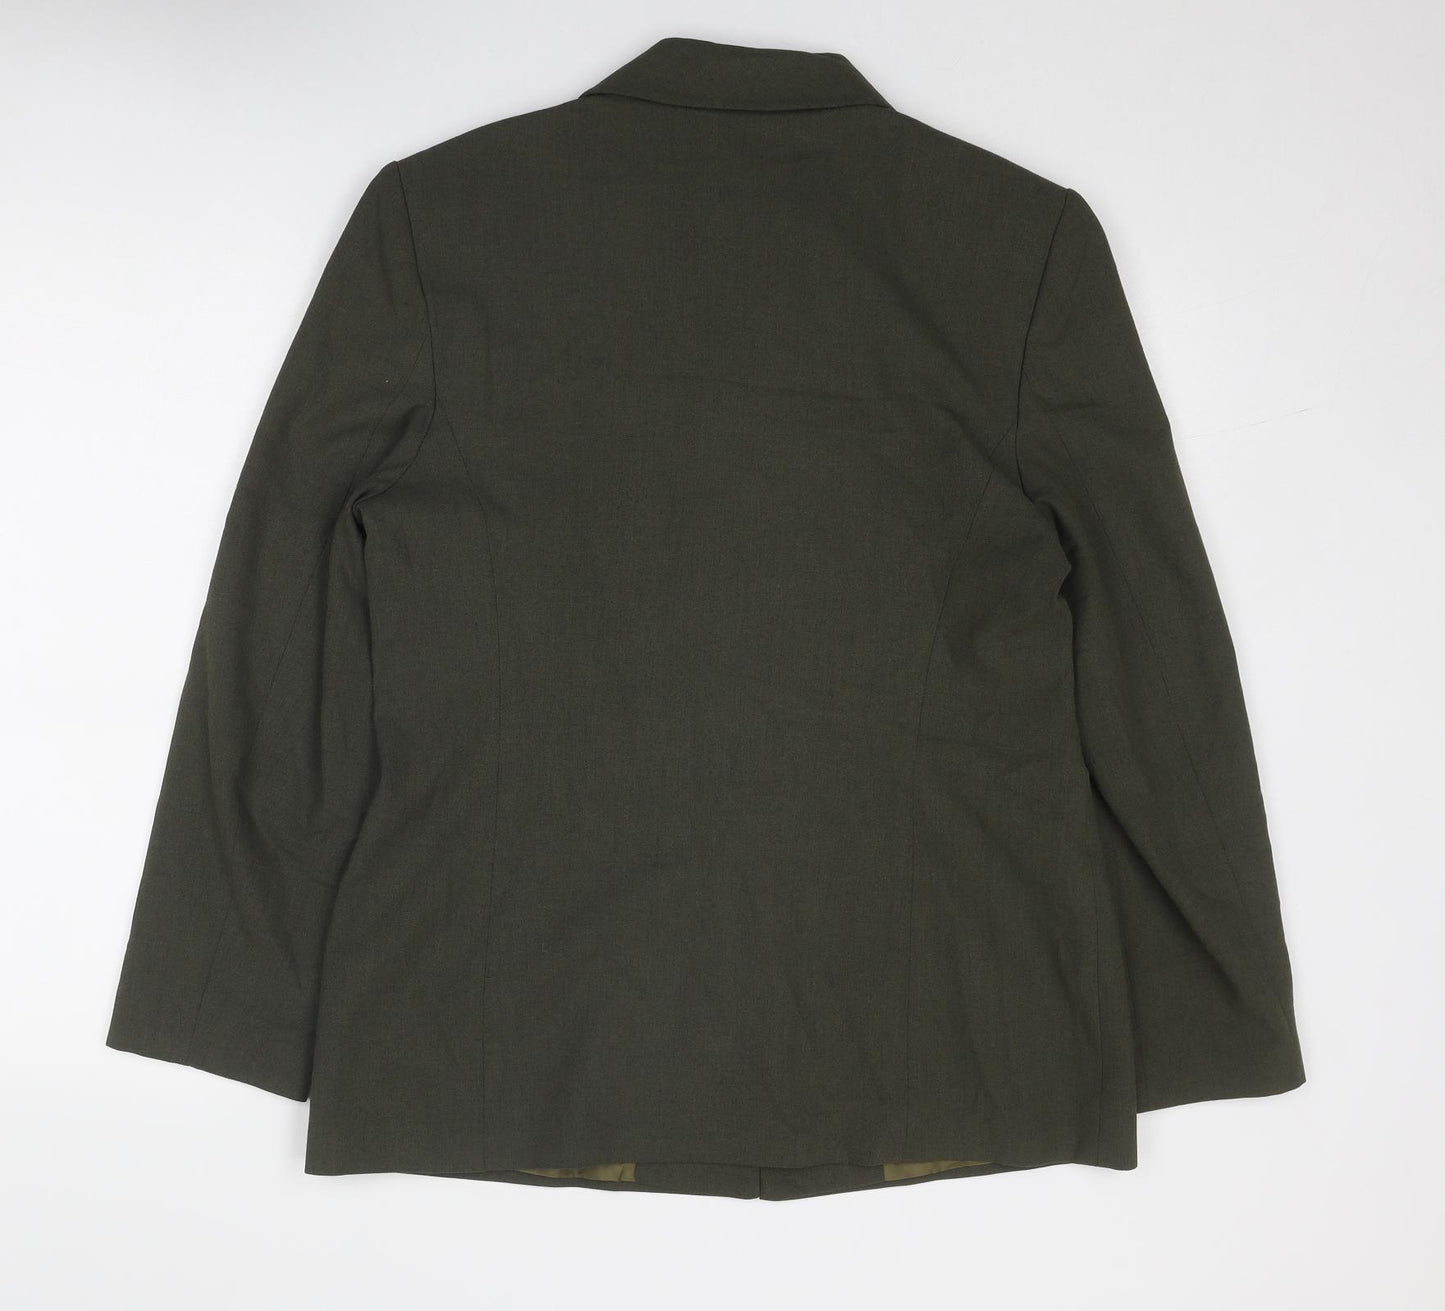 St Michael Womens Green Jacket Blazer Size 16 Button